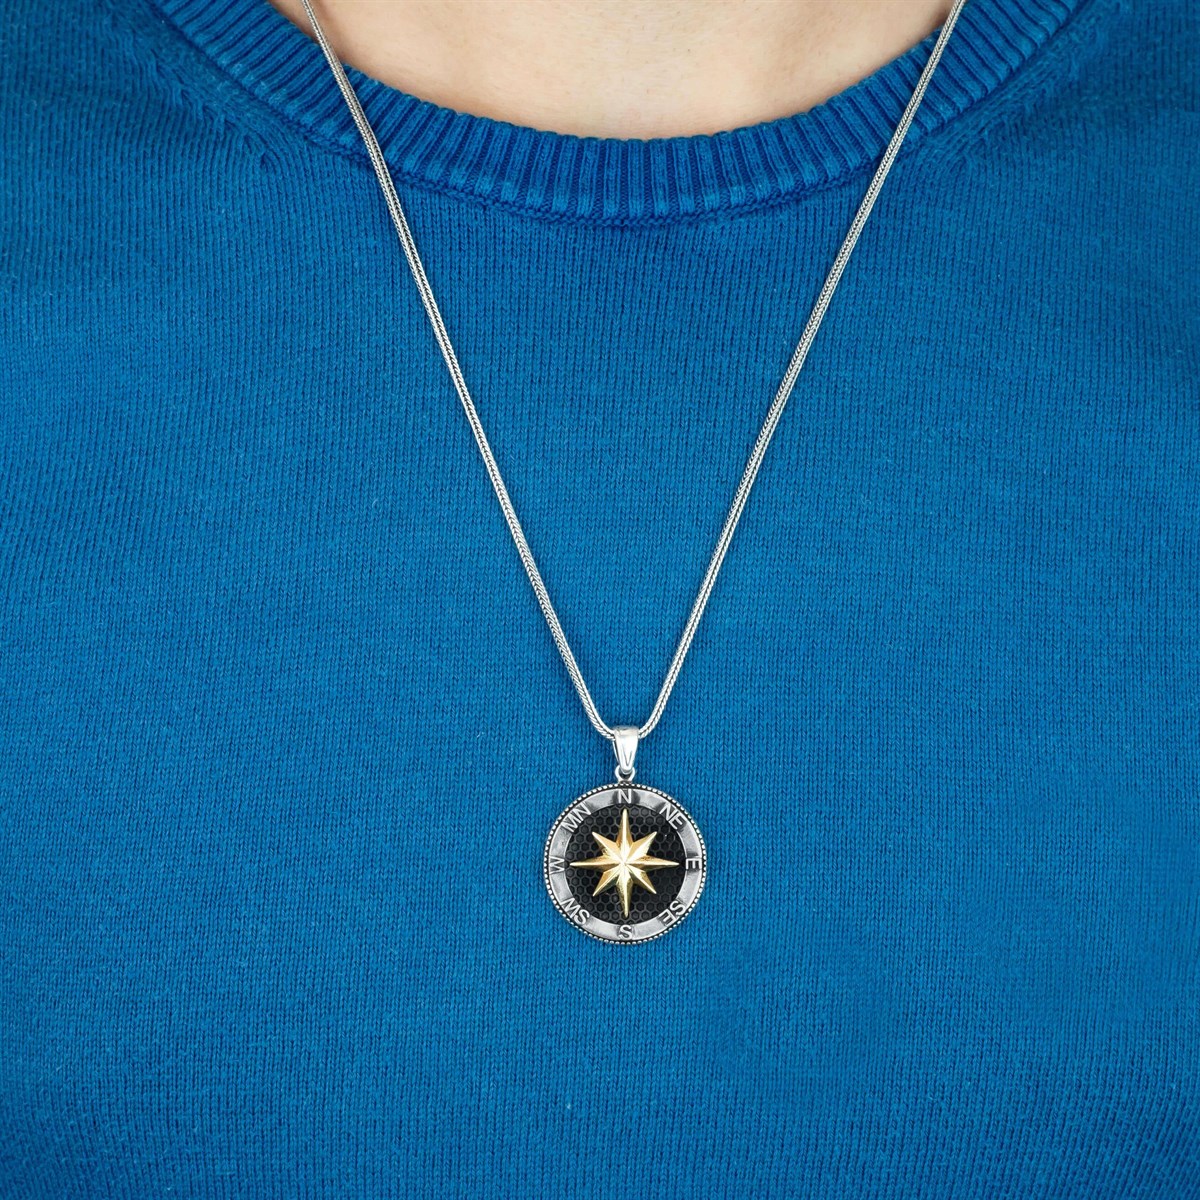 Special Design Vintage Dimmed Compass Sterling Silver Men's Necklace